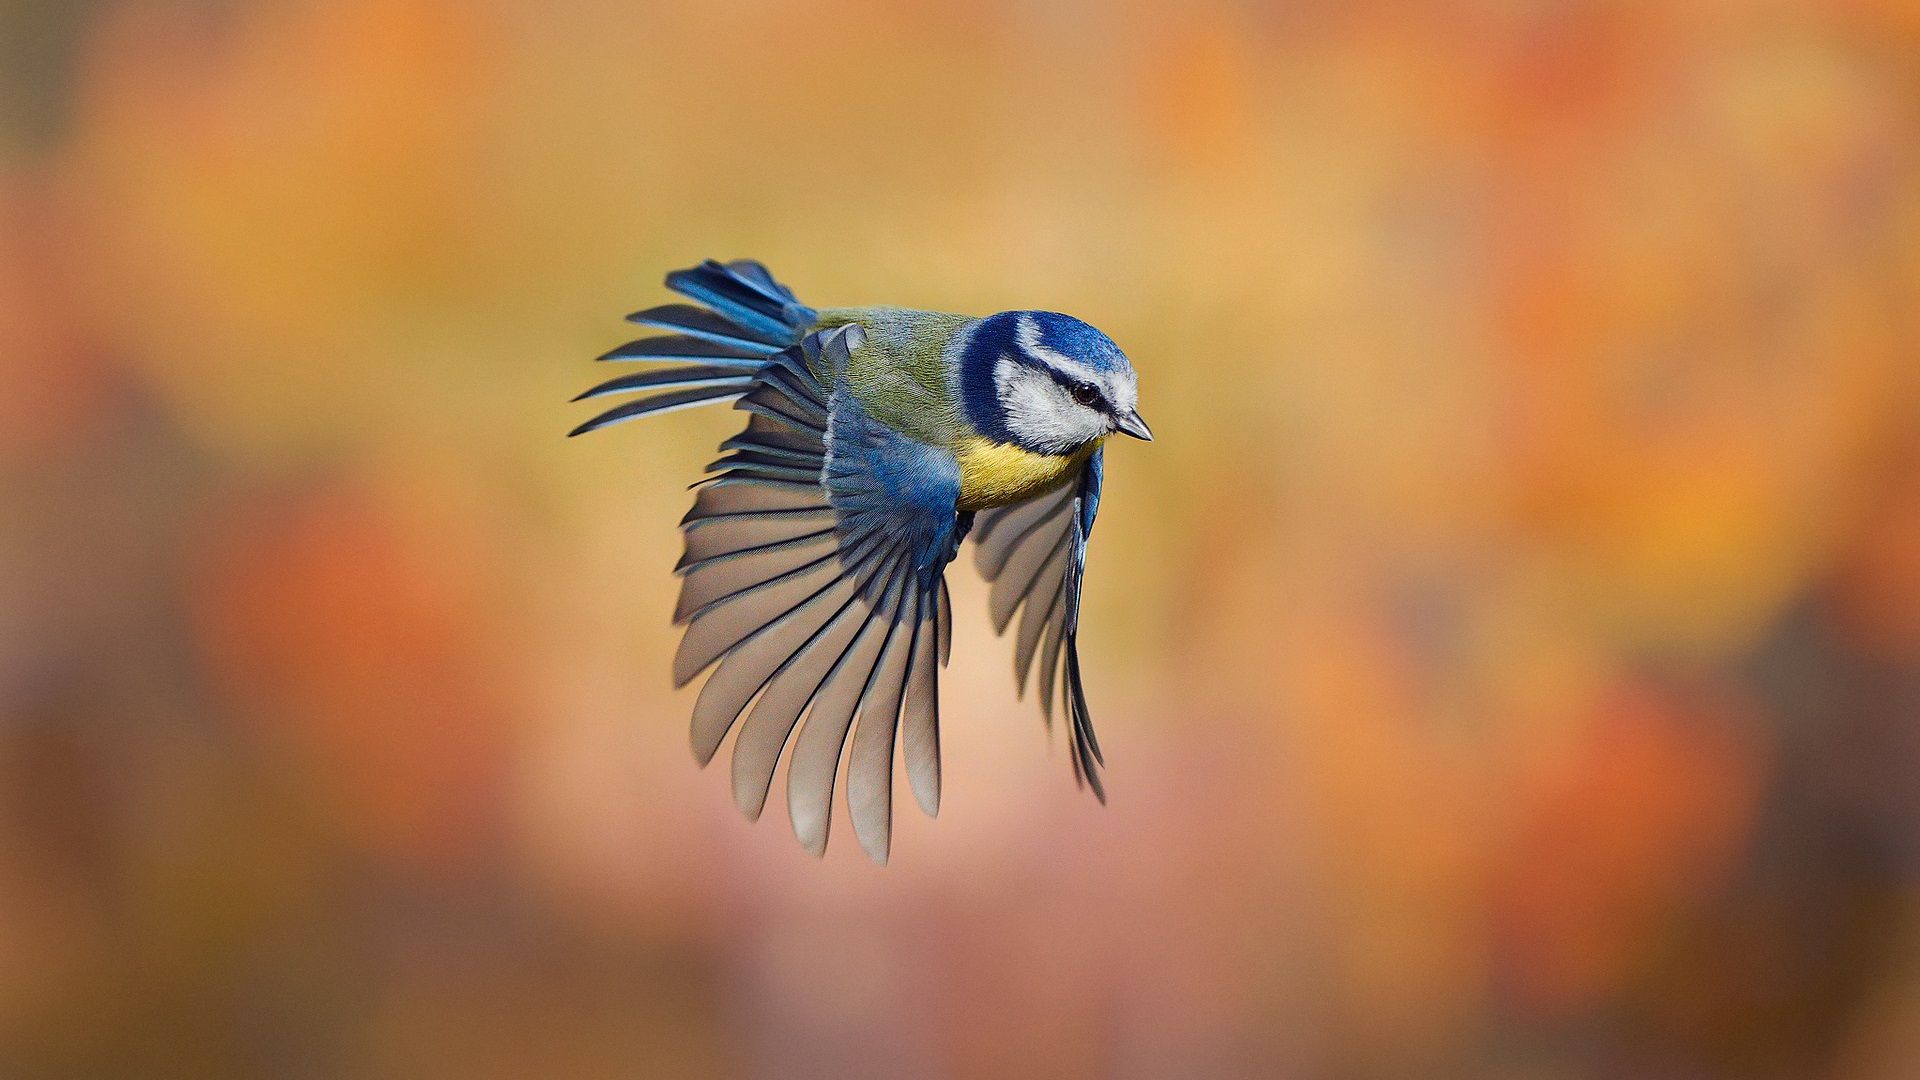 Bird close-up, chickadee flying, blur background wallpaper 1920x1080 ...